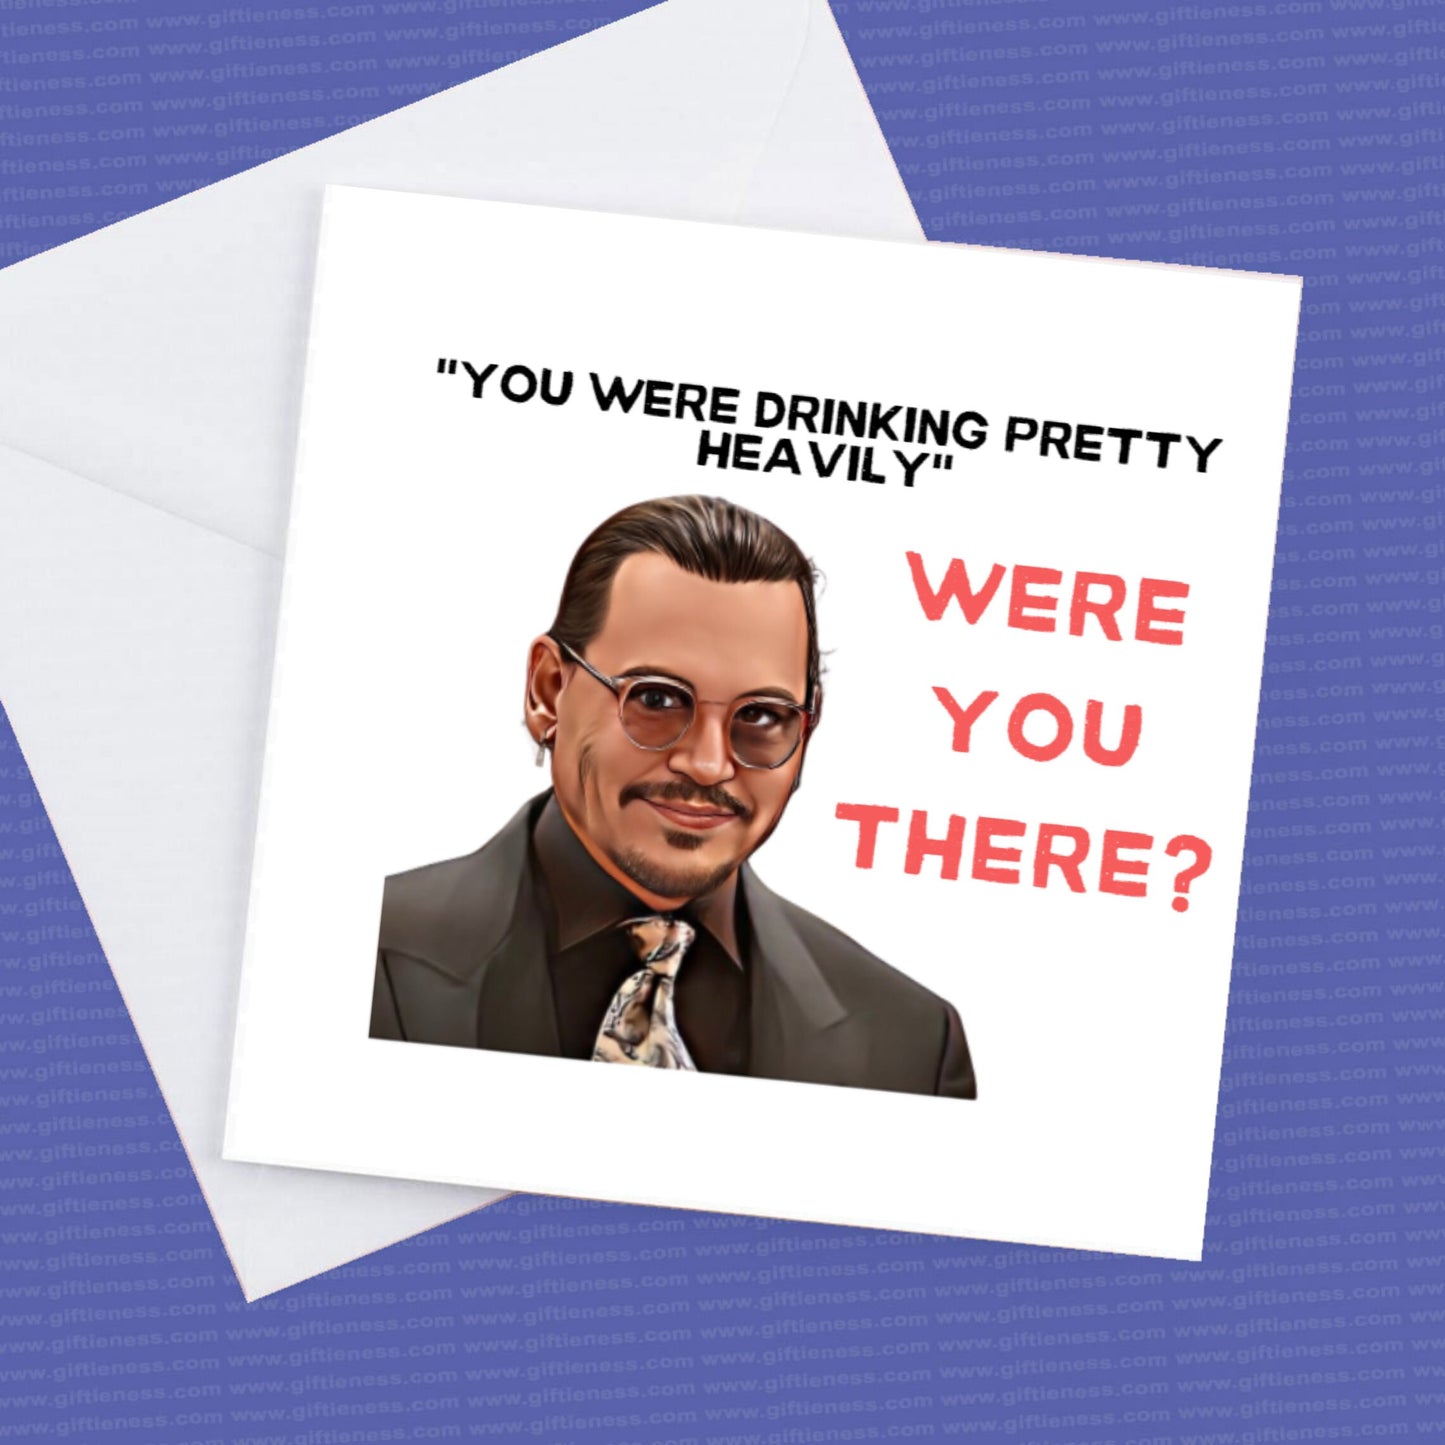 You Were Drinking Pretty Heavily, Were You There? Johnny Depp Card, Johnny Depp Birthday Card, Johnny Depp Fun Card